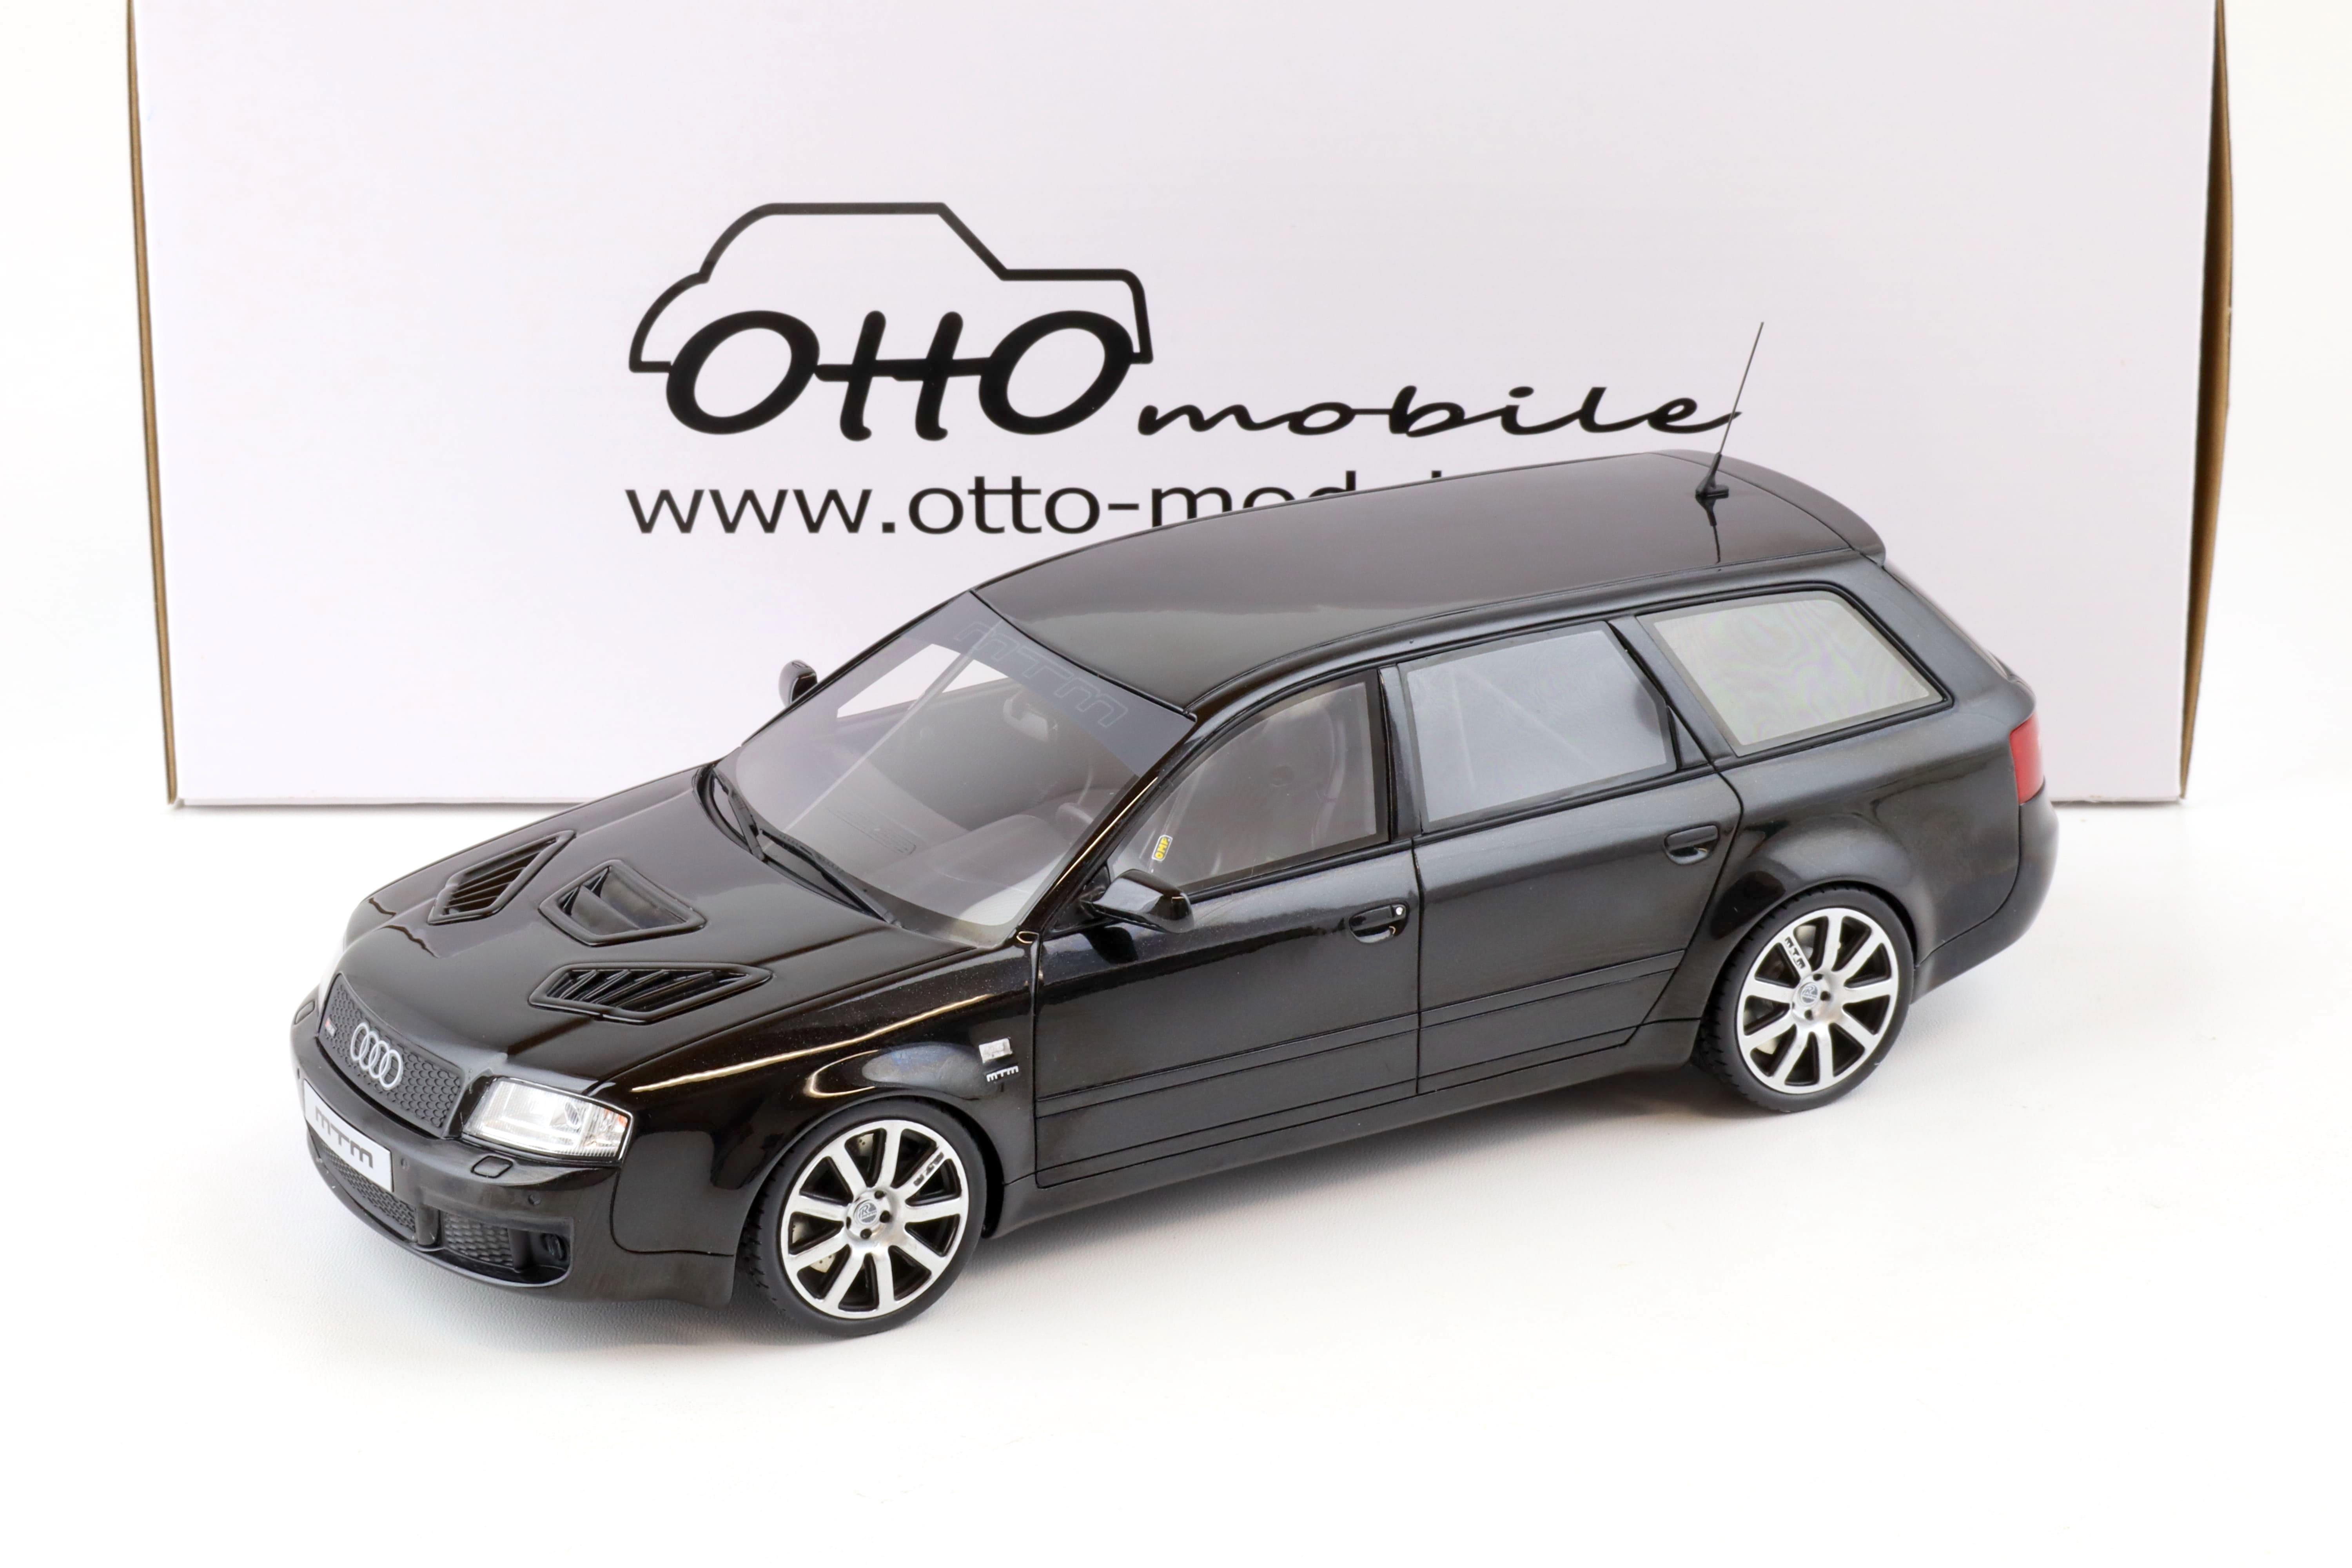 1:18 OTTO mobile OT992 Audi RS6 (C5) Avant Clubsport MTM black 2004